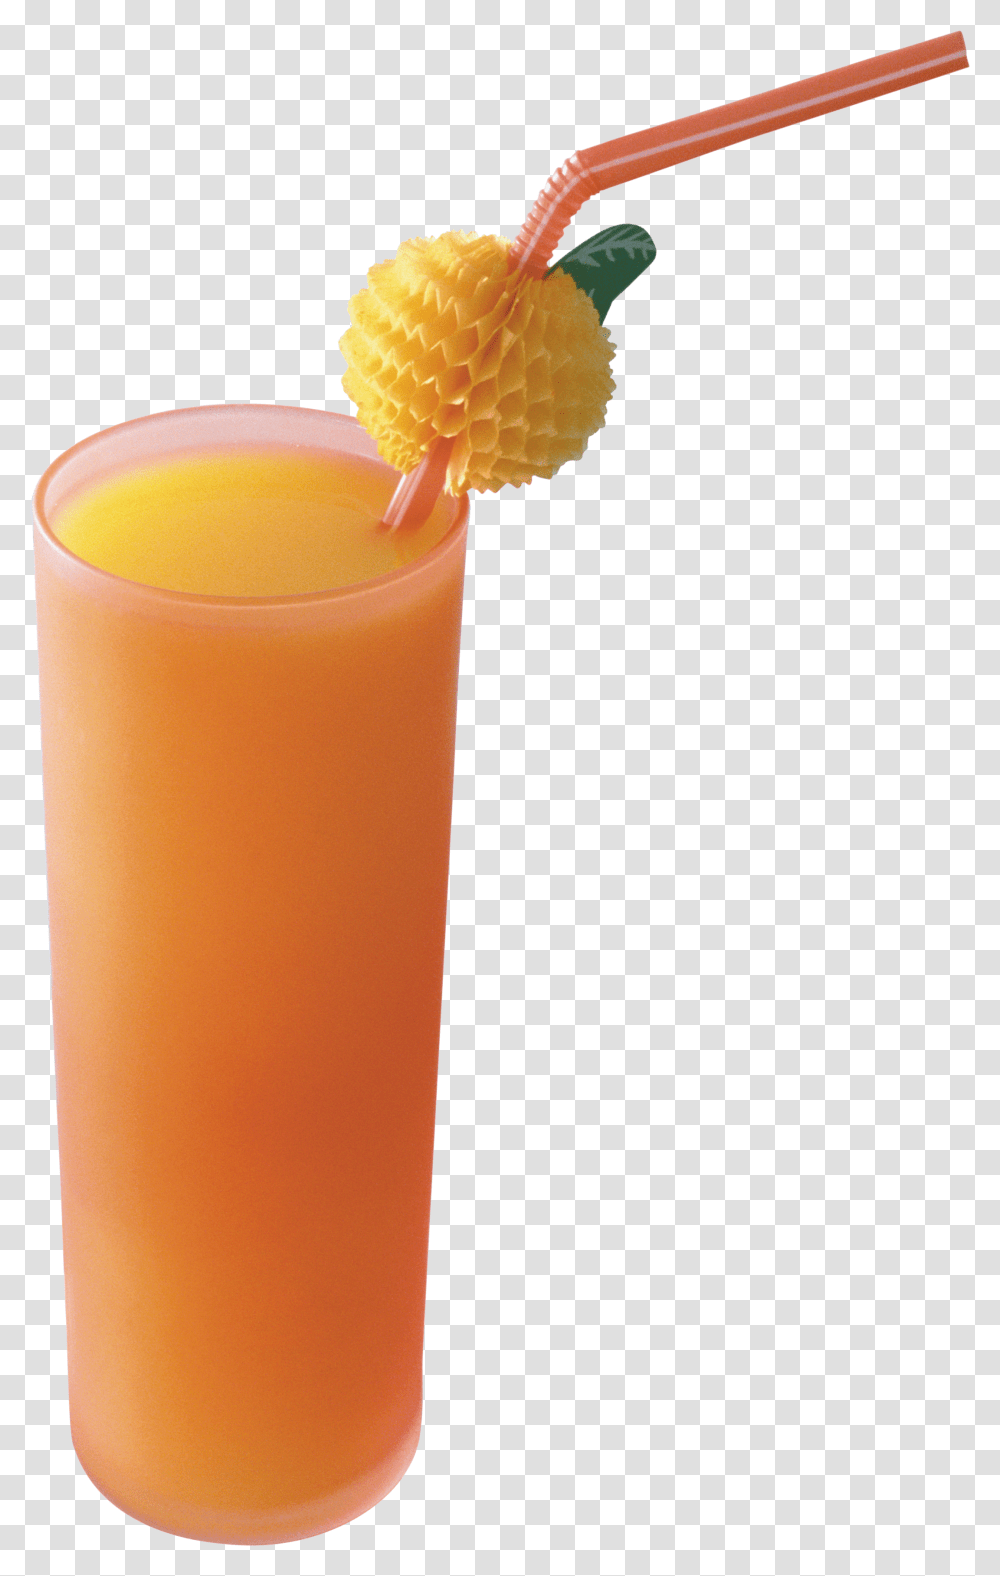 Juice Image Juice Beach, Beverage, Drink, Orange Juice, Beer Transparent Png